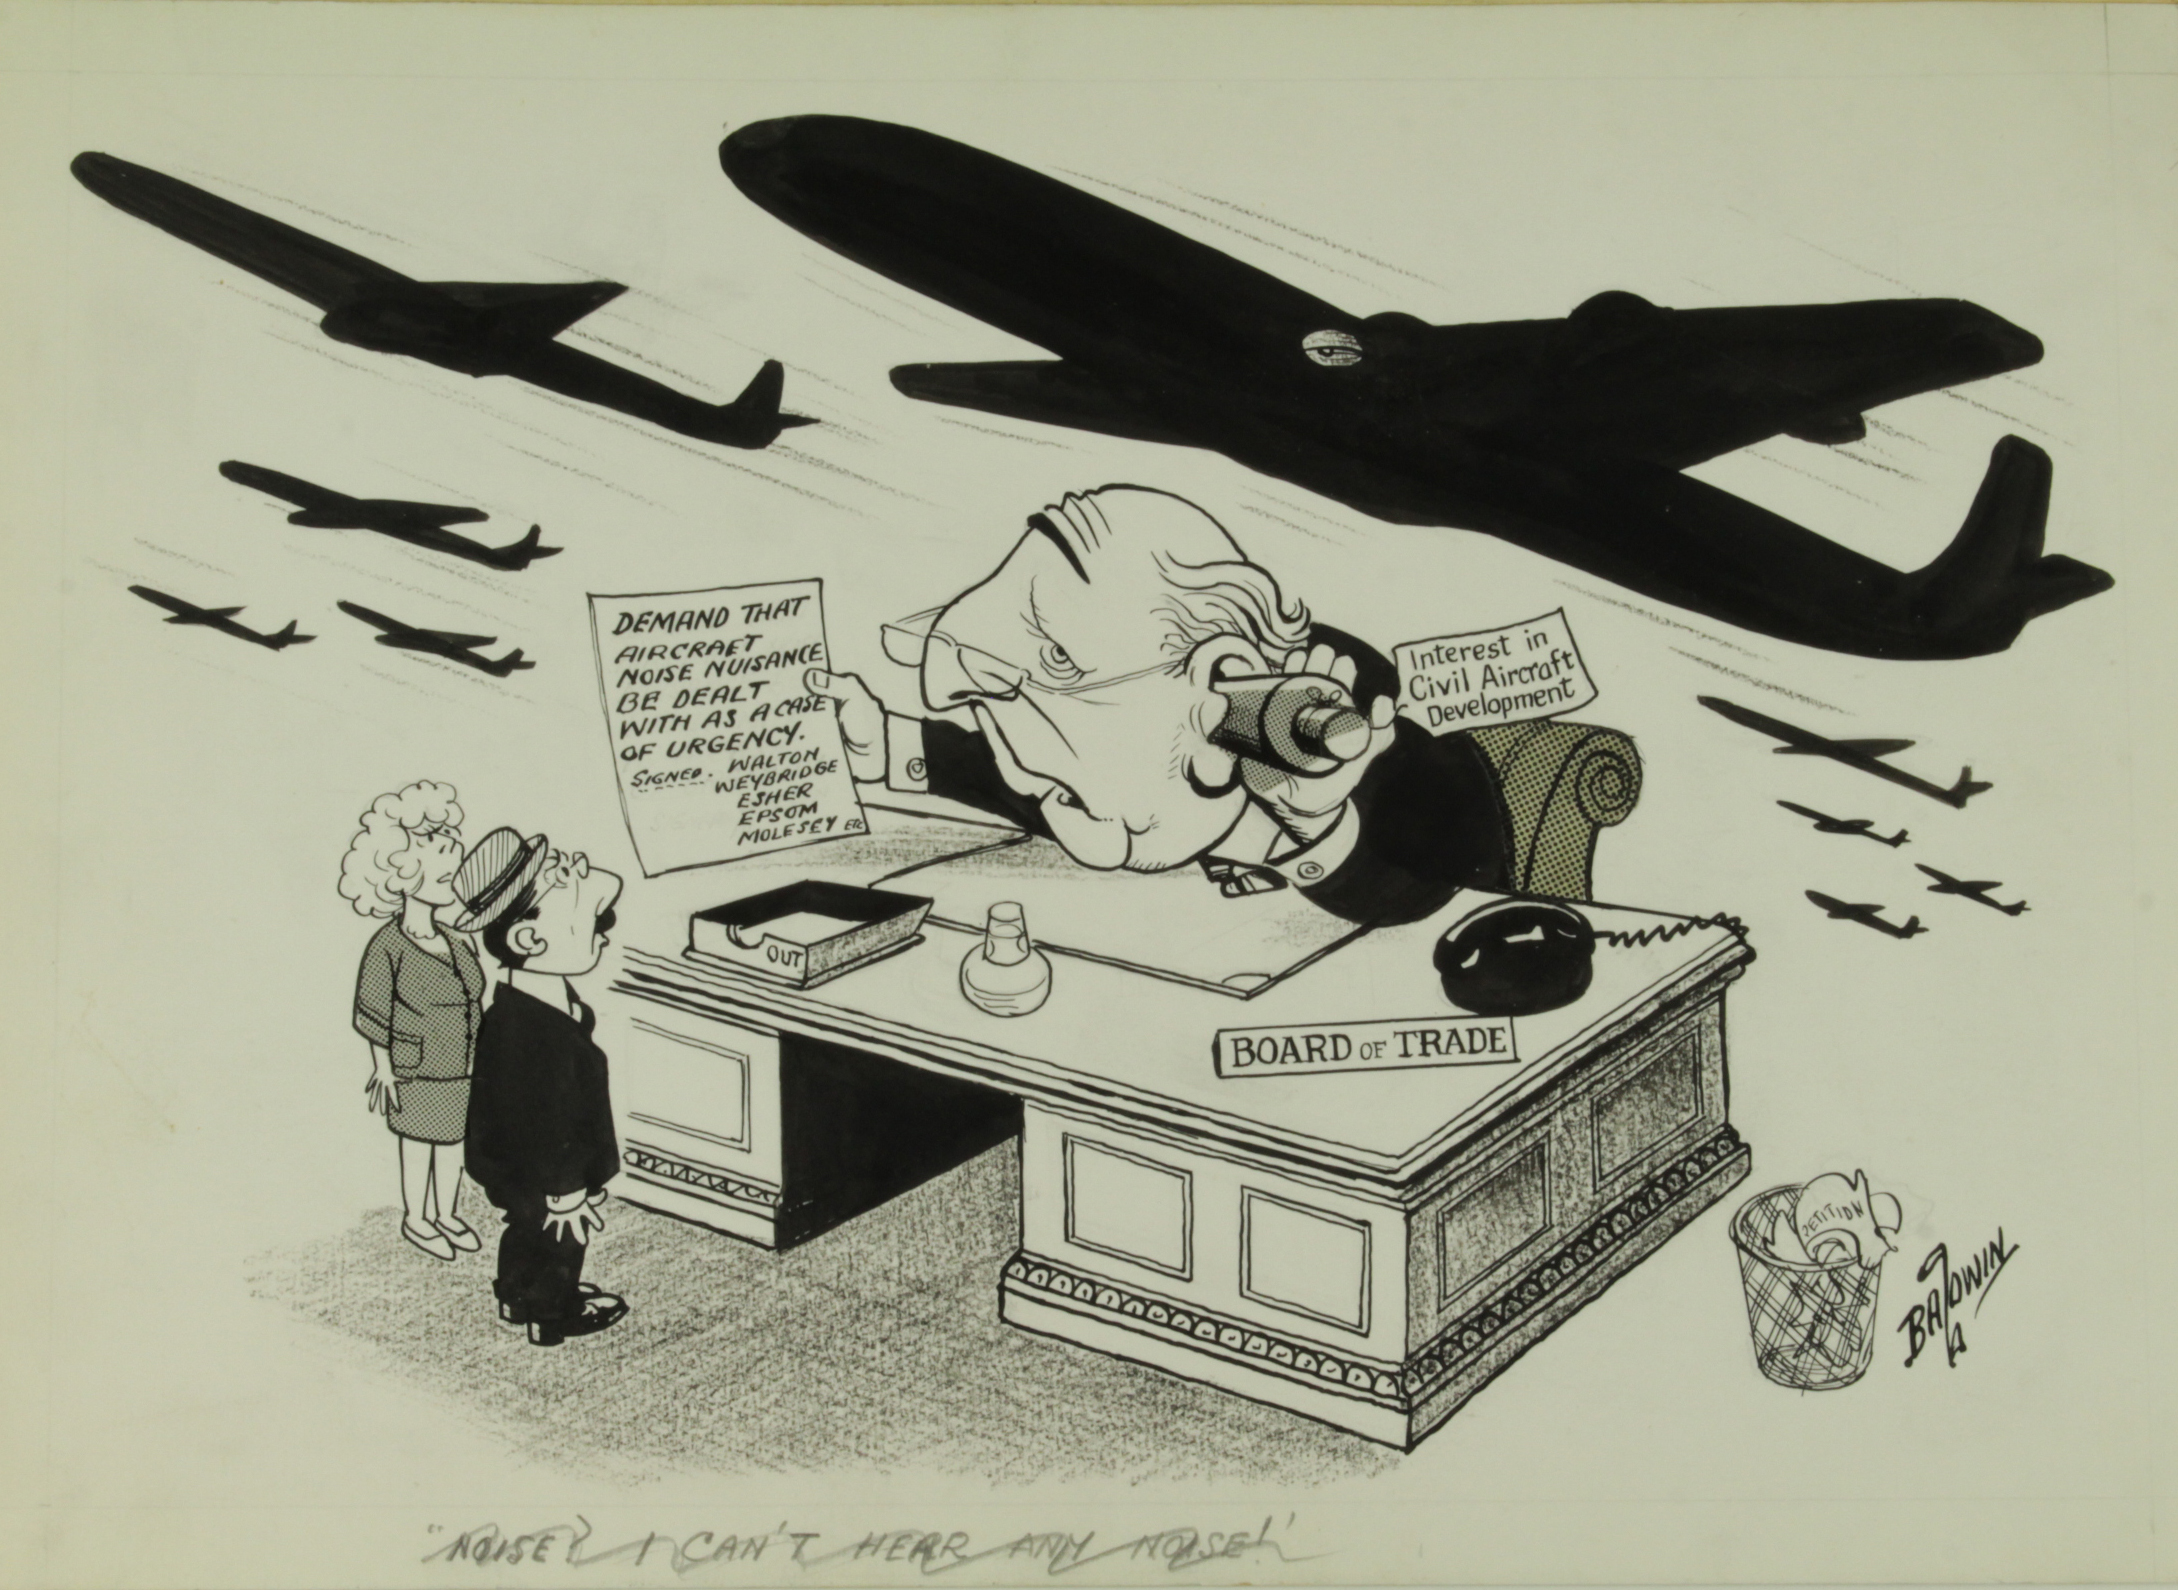 Original Artwork. Pen & ink, an original newspaper cartoon illustration, depicting a member of the